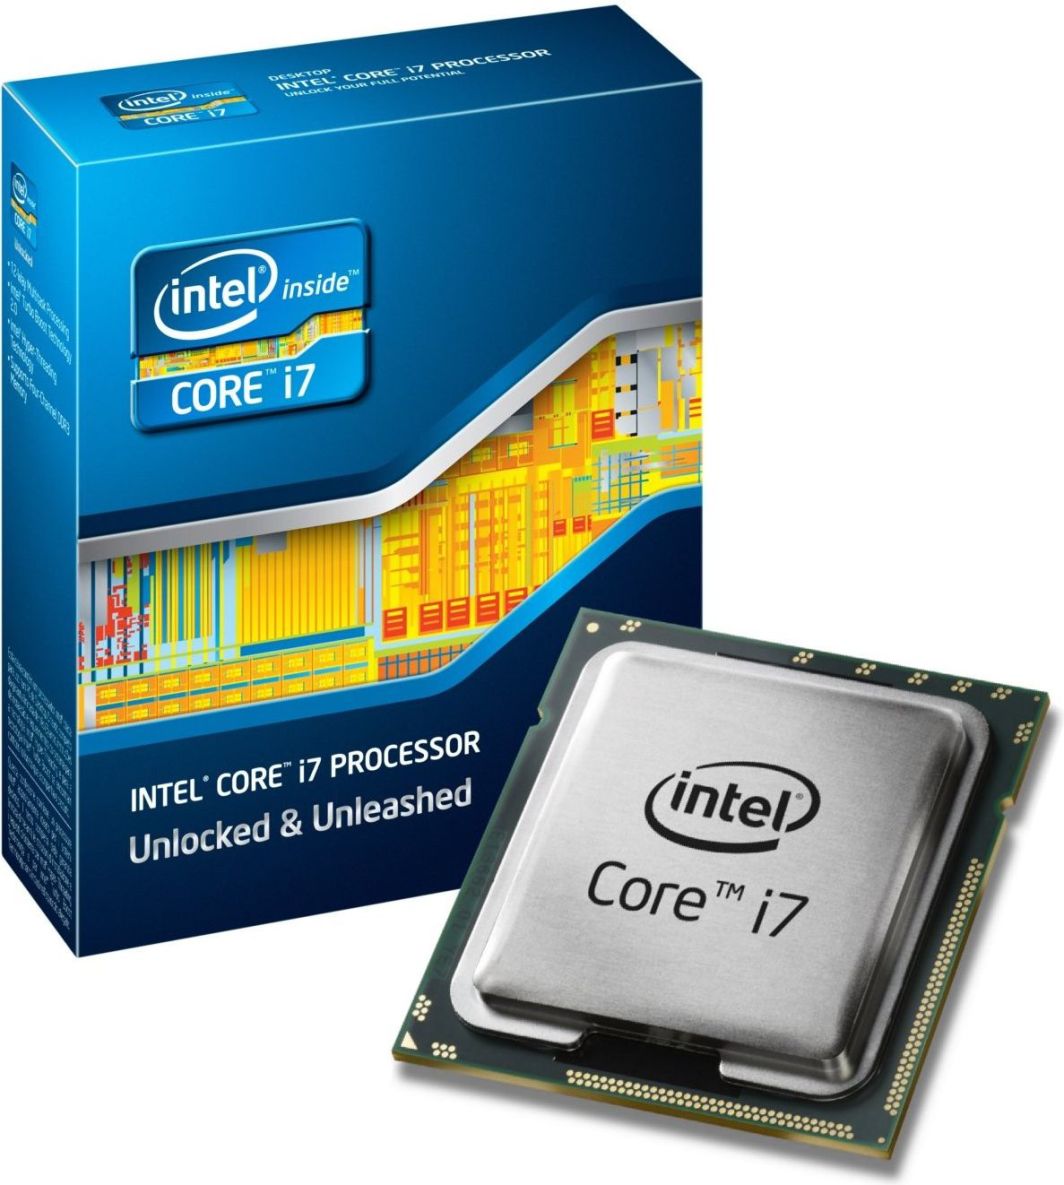 Купить core 7. Процессор Intel® Core™ i7. Процессор Интел Core i7. Процессор для ноутбука Intel Core i7. Процессор Интел коре ай 7.